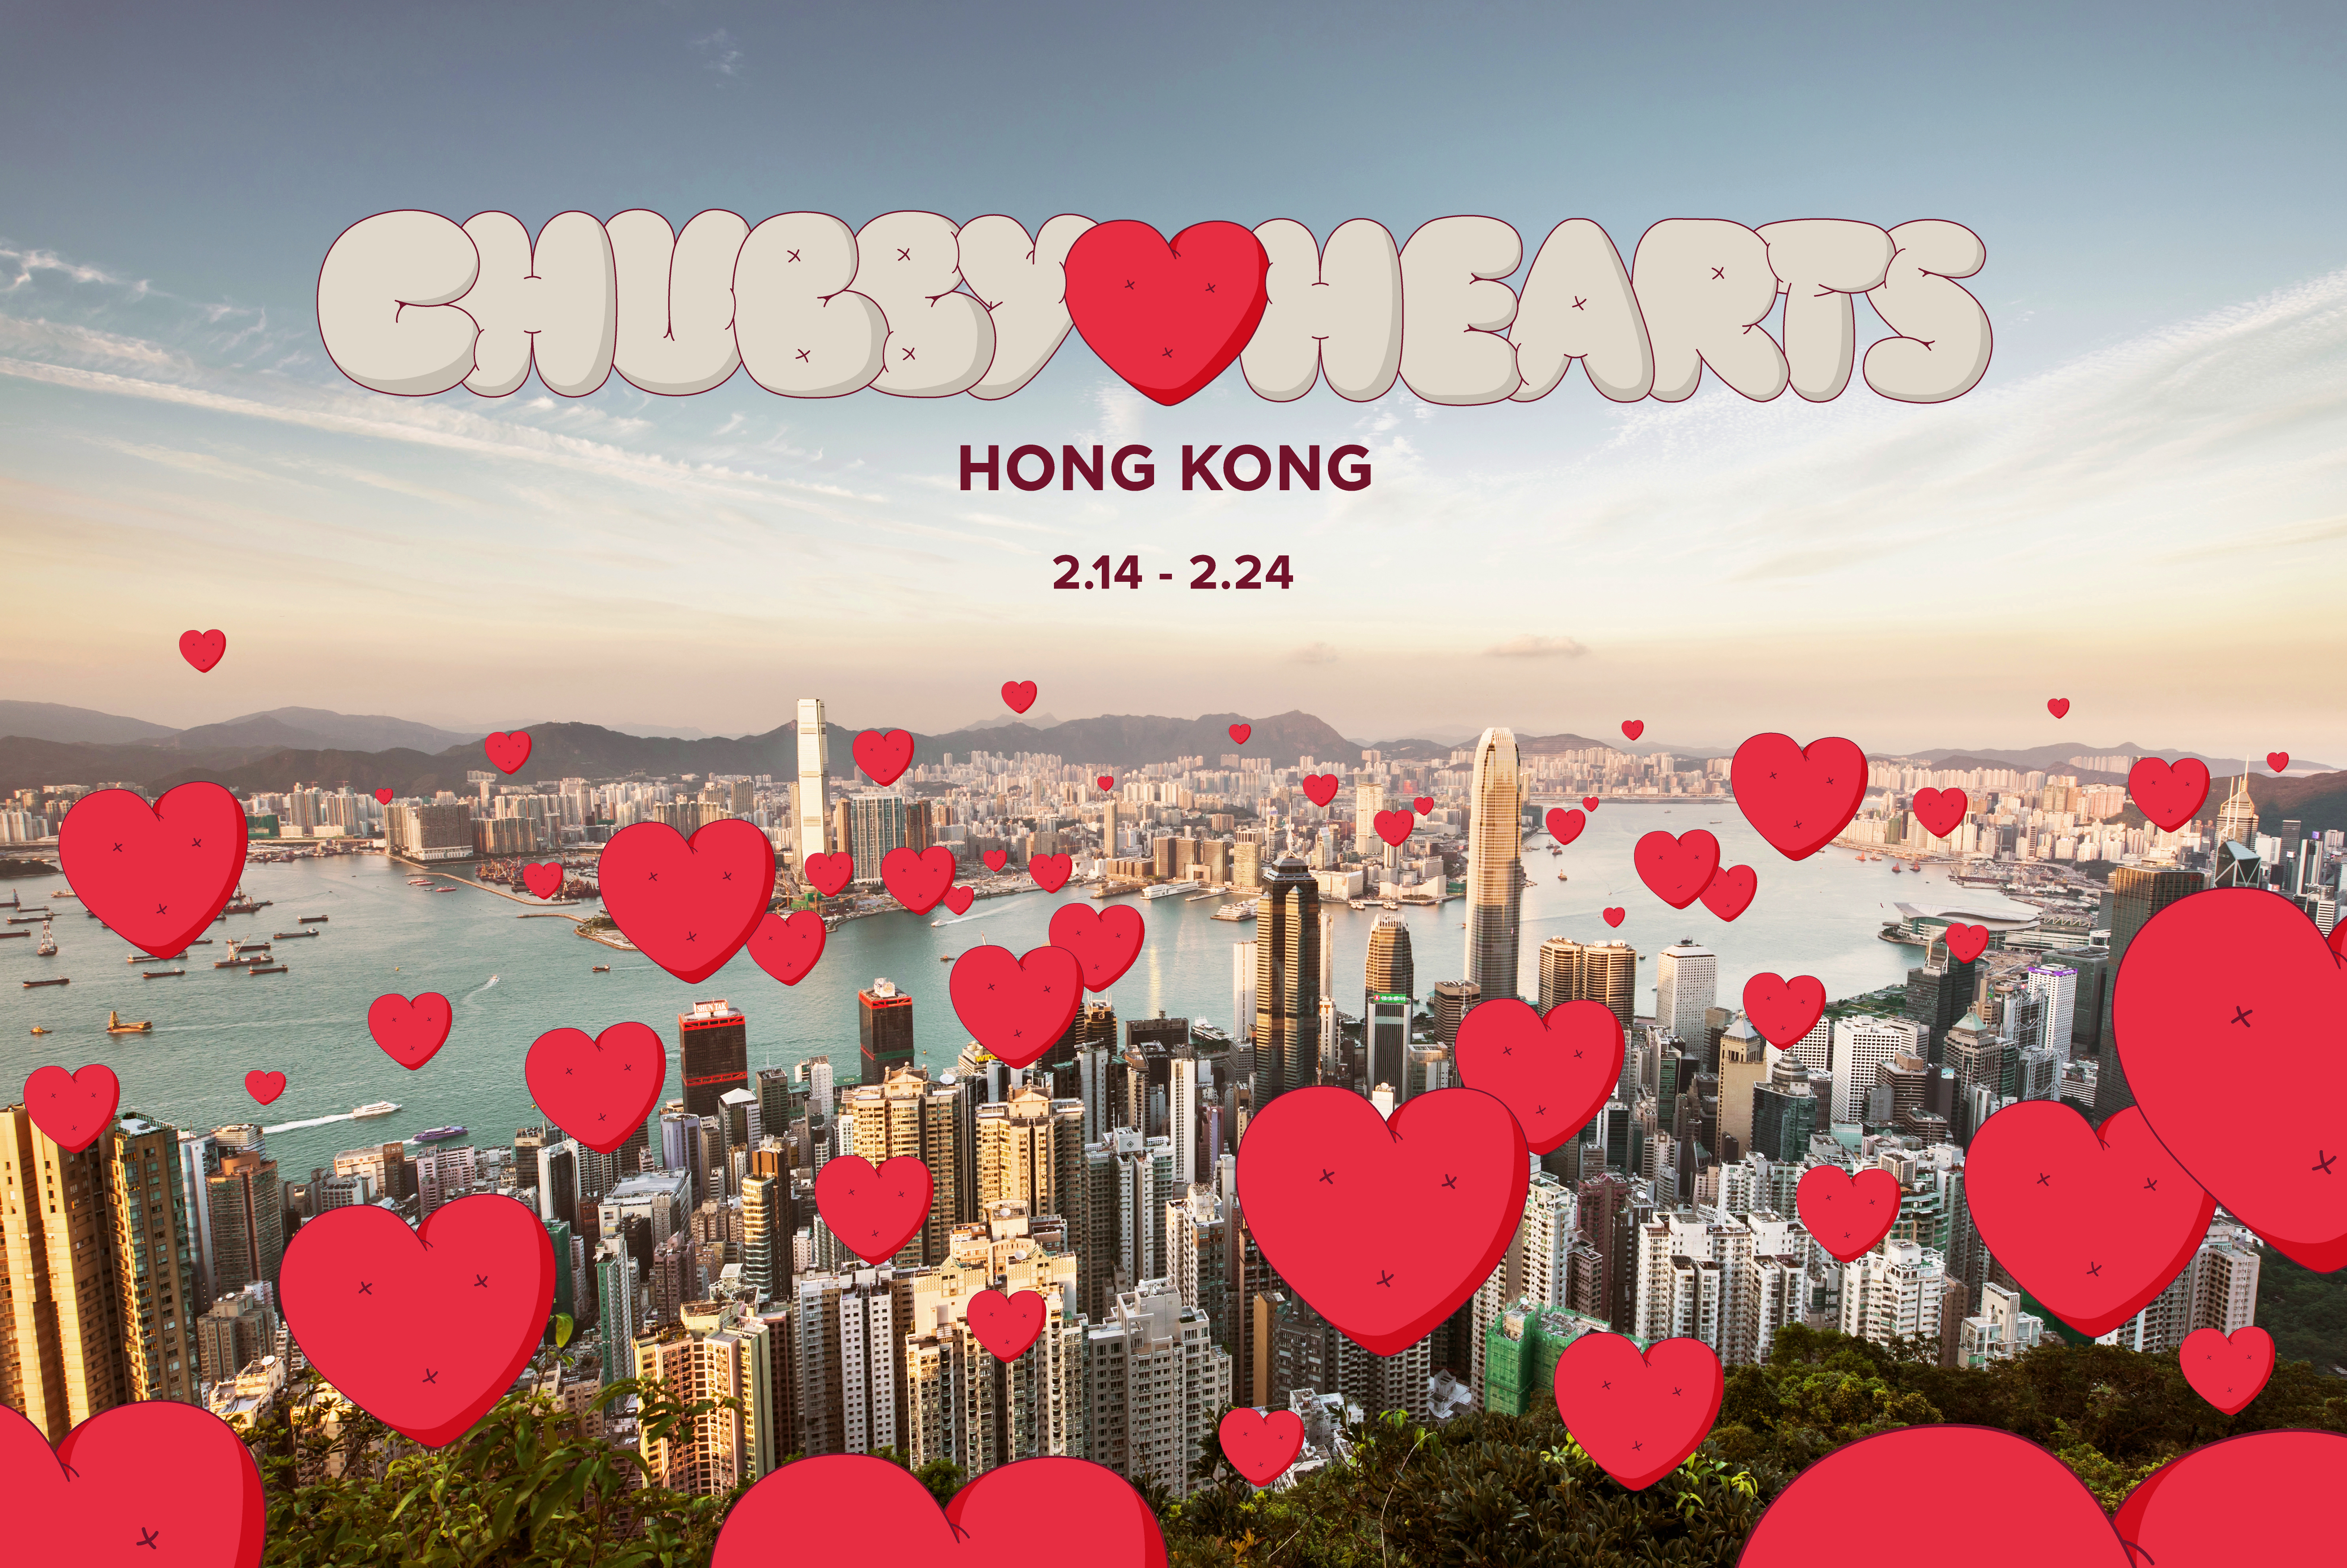 Hong Kong Design Centre Presents ‘Chubby Hearts Hong Kong’ Giant Hearts Captivate Hong Kong to Spread Love